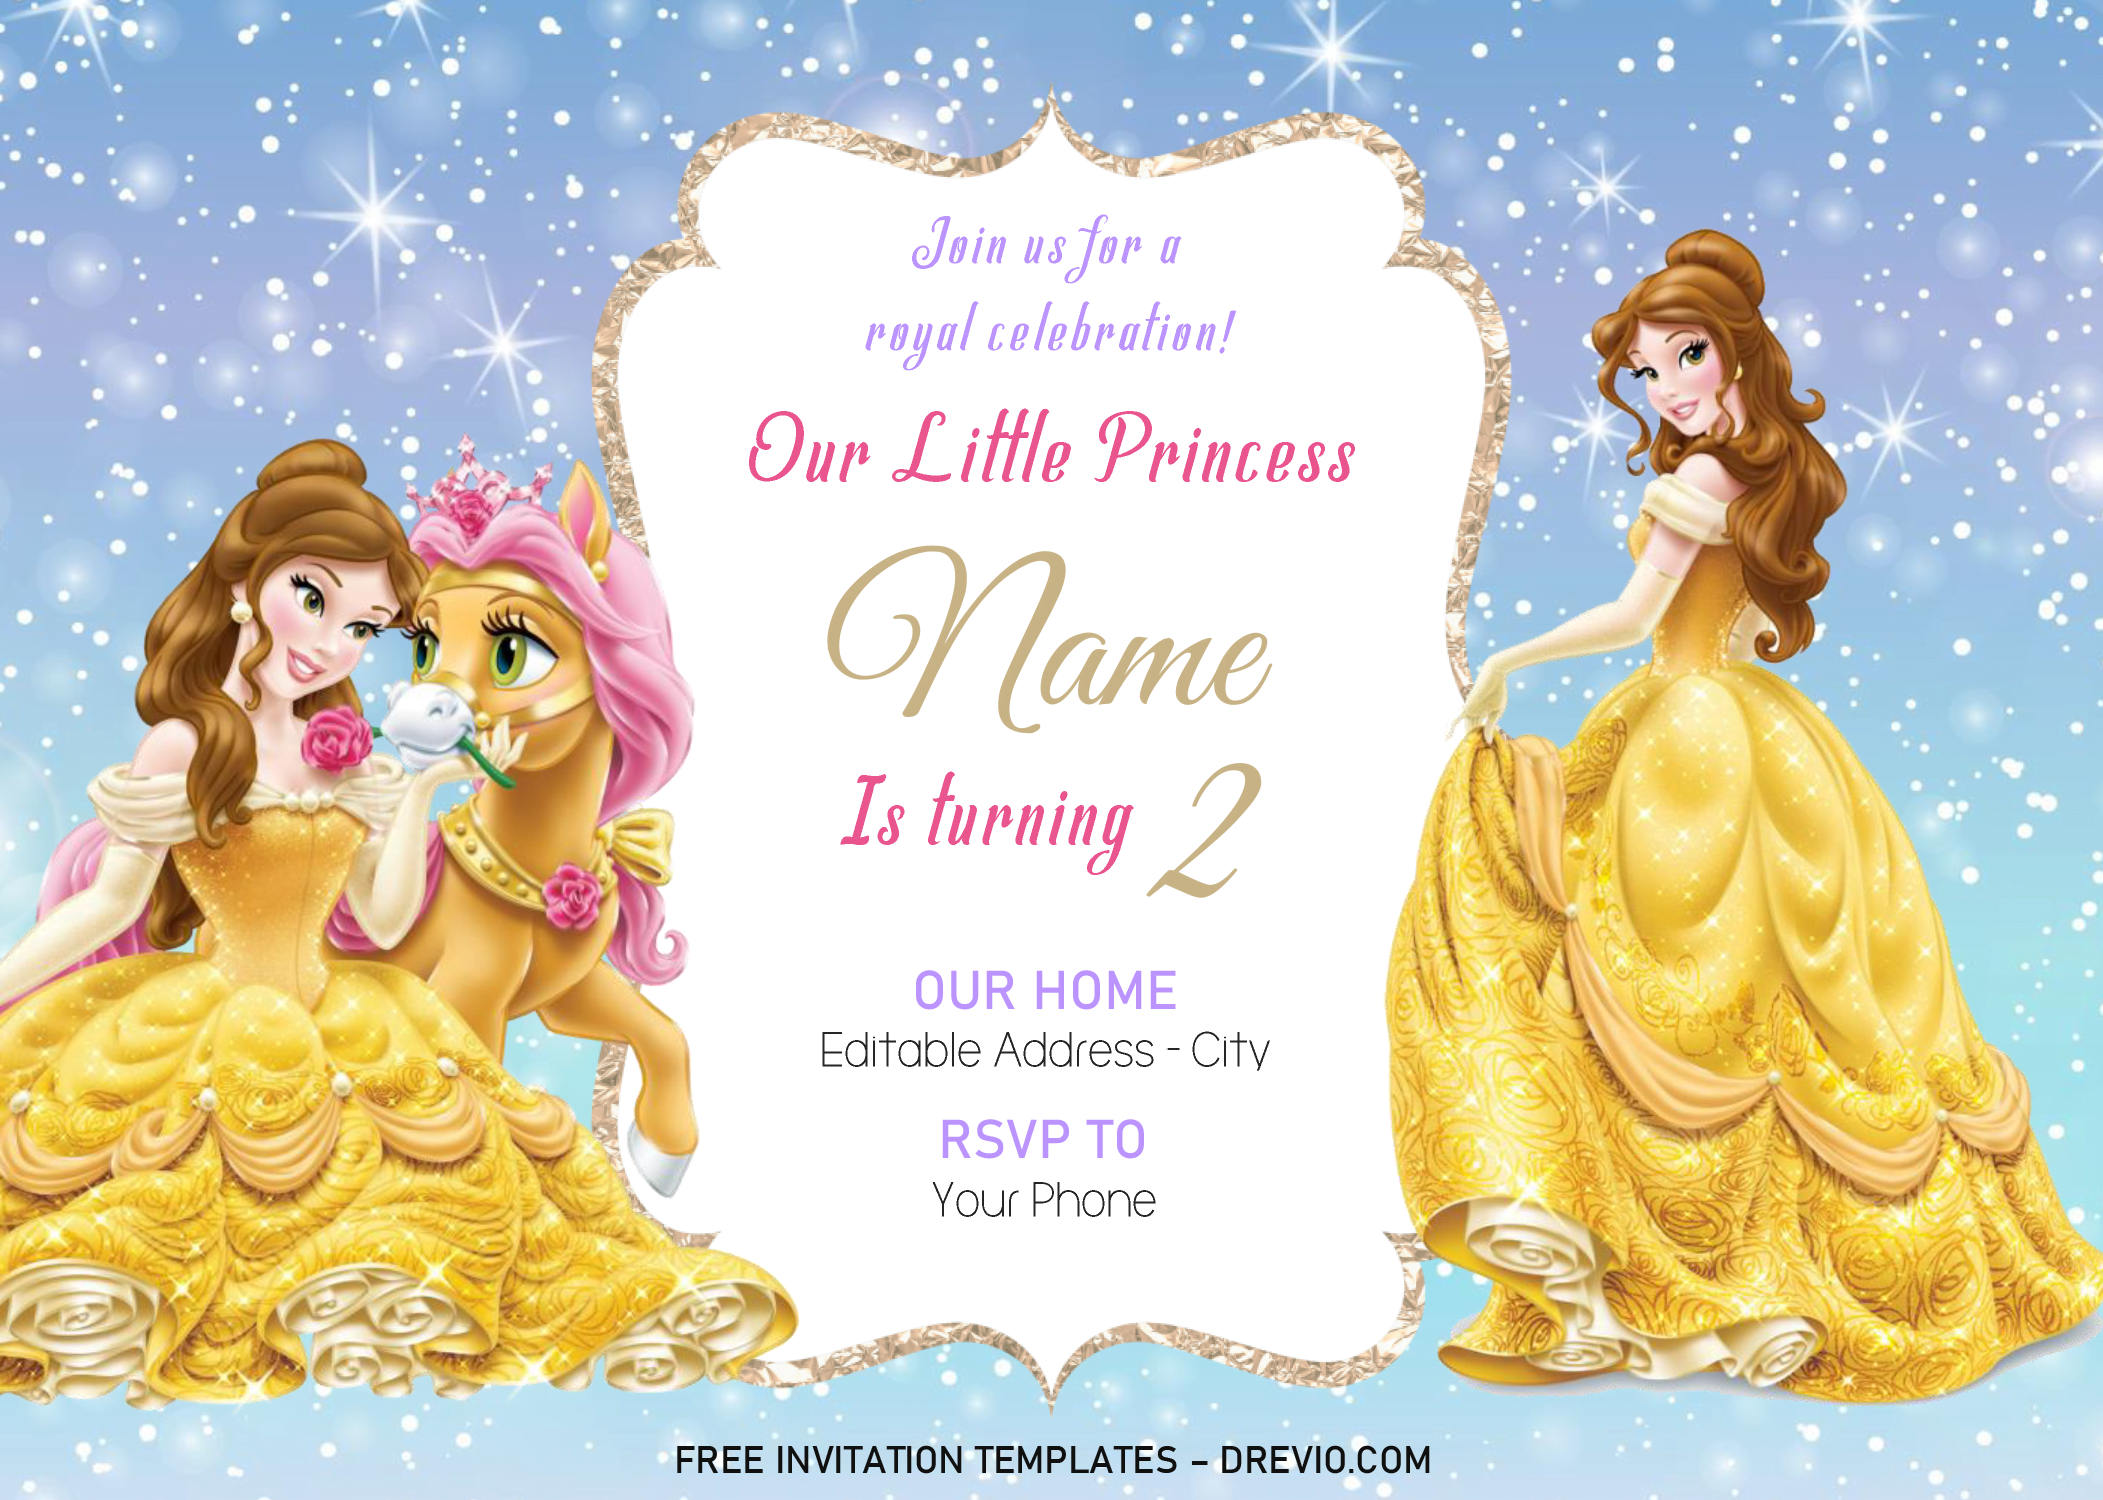 Disney Princess Invitation Templates Editable With Ms Word Download